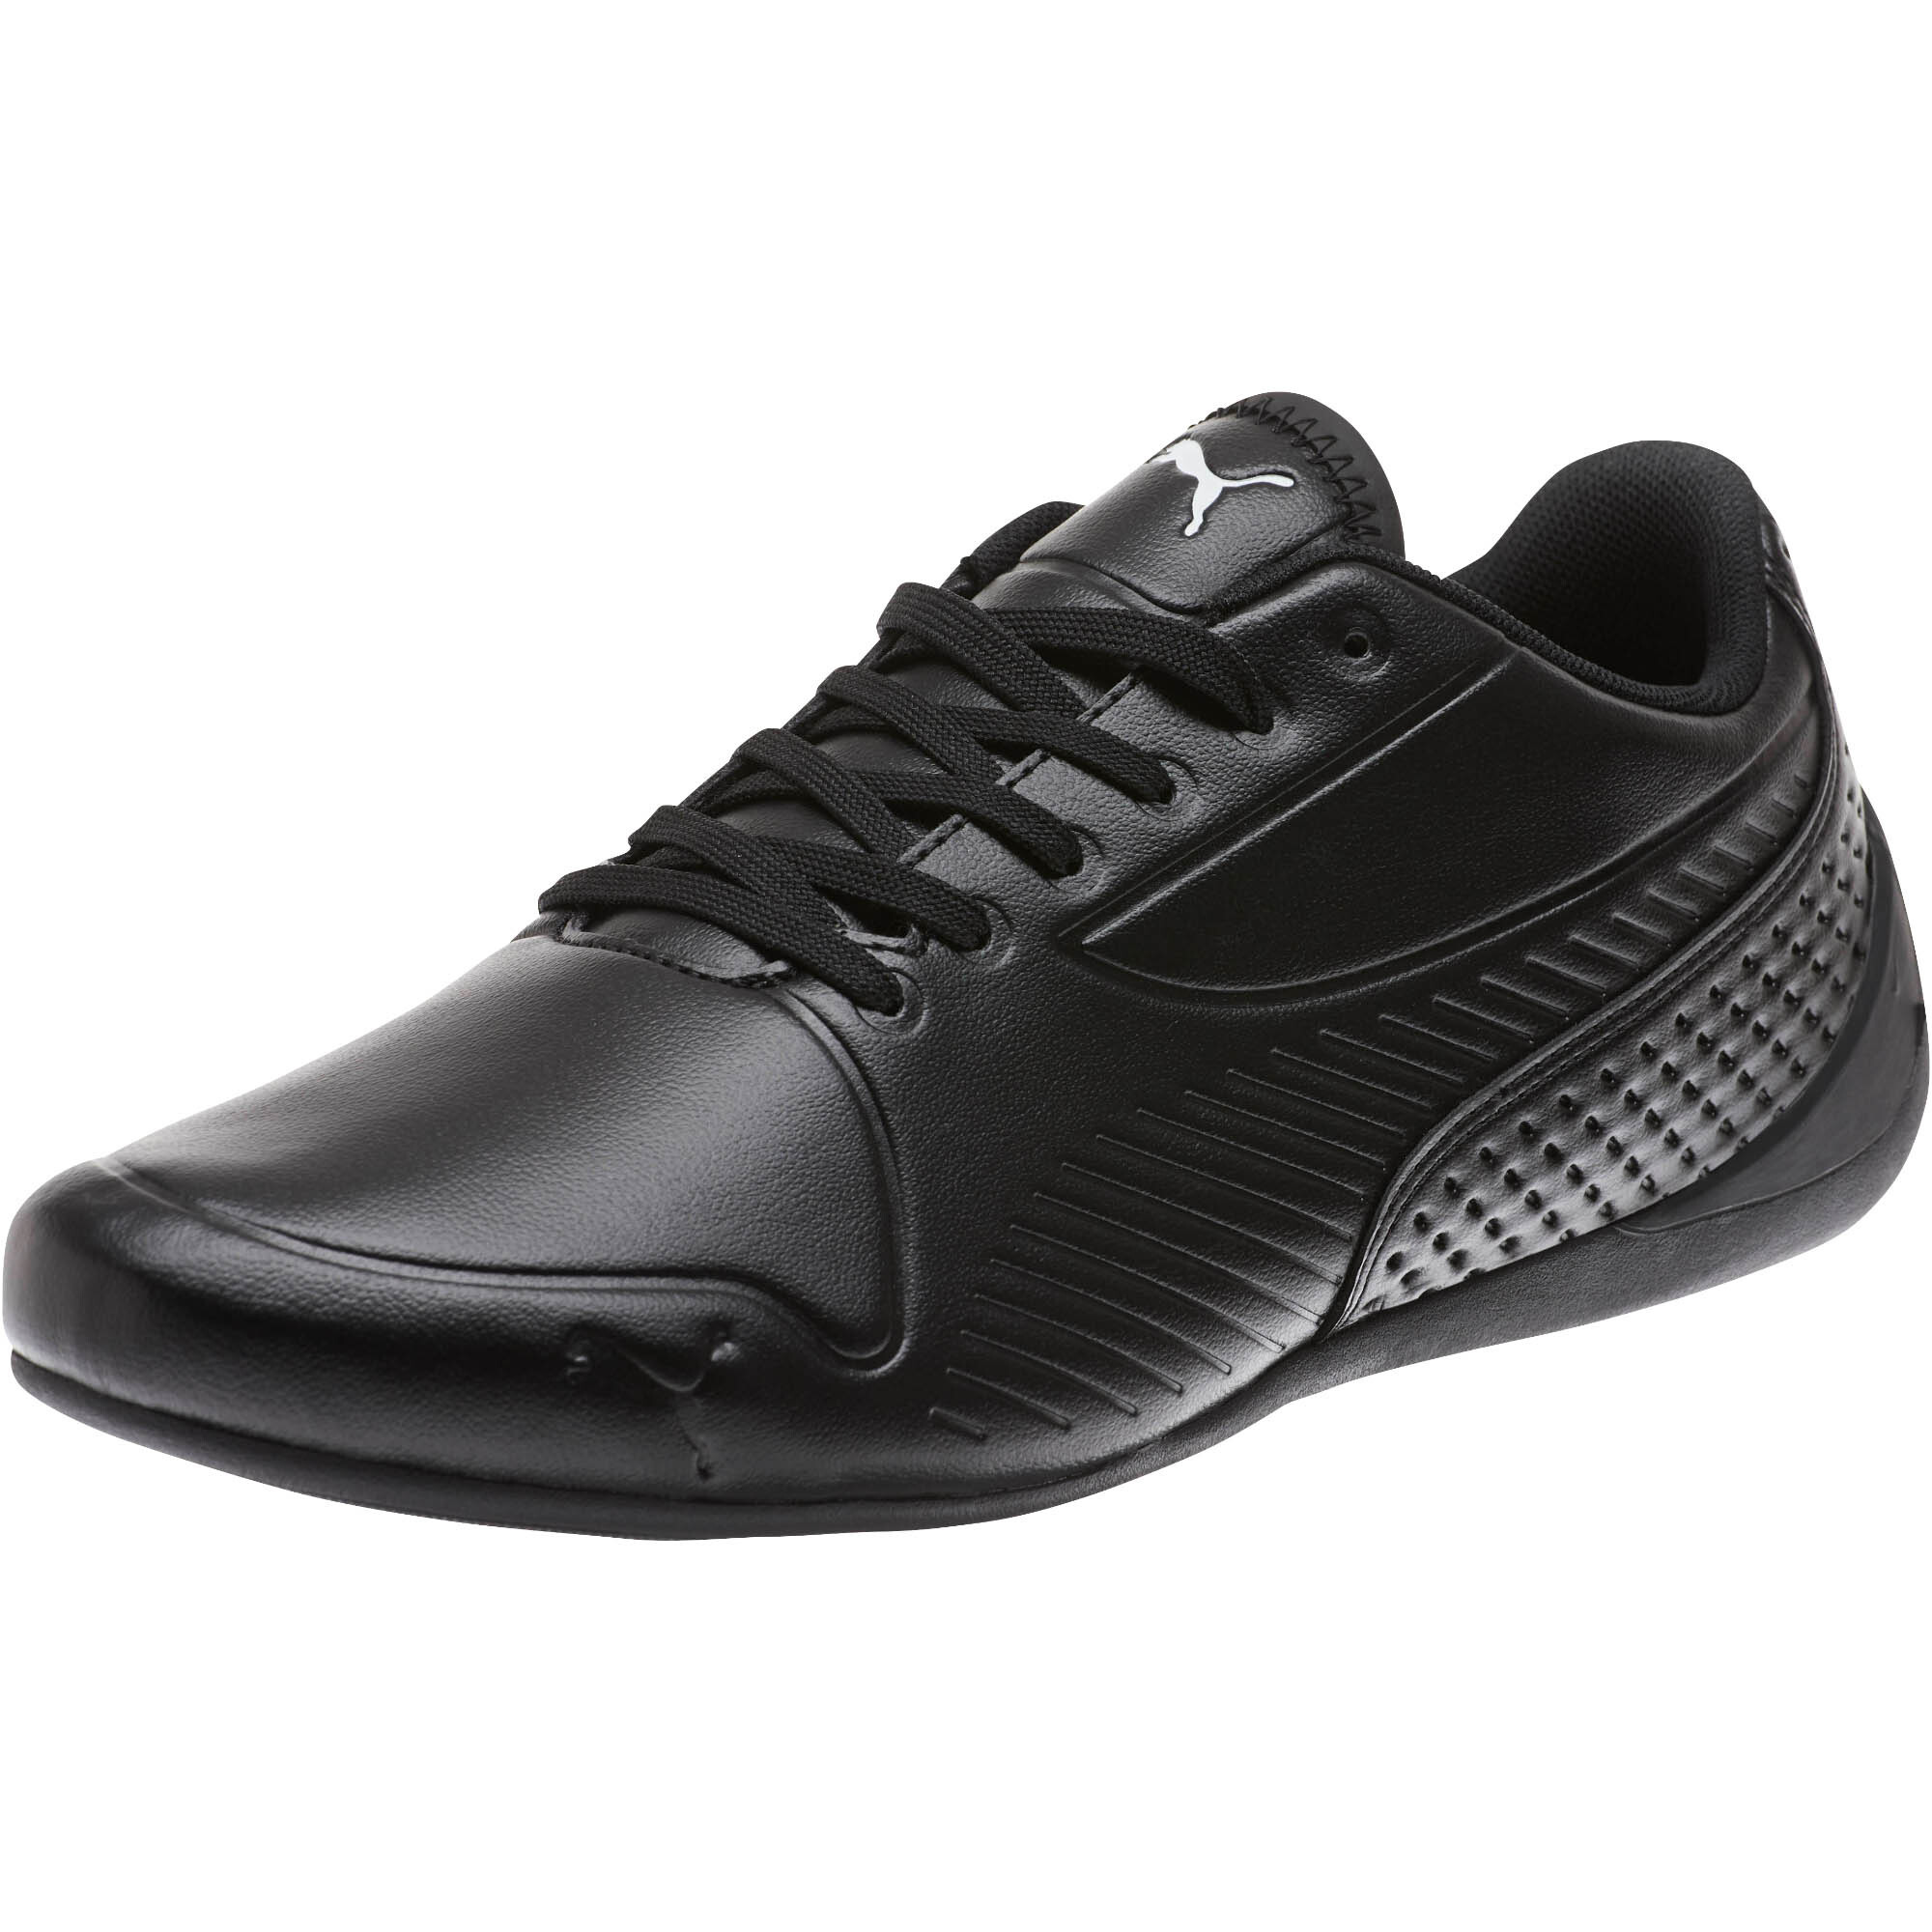 PUMA Drift Cat 7S Ultra Men's Shoes Men Shoe Basics | eBay